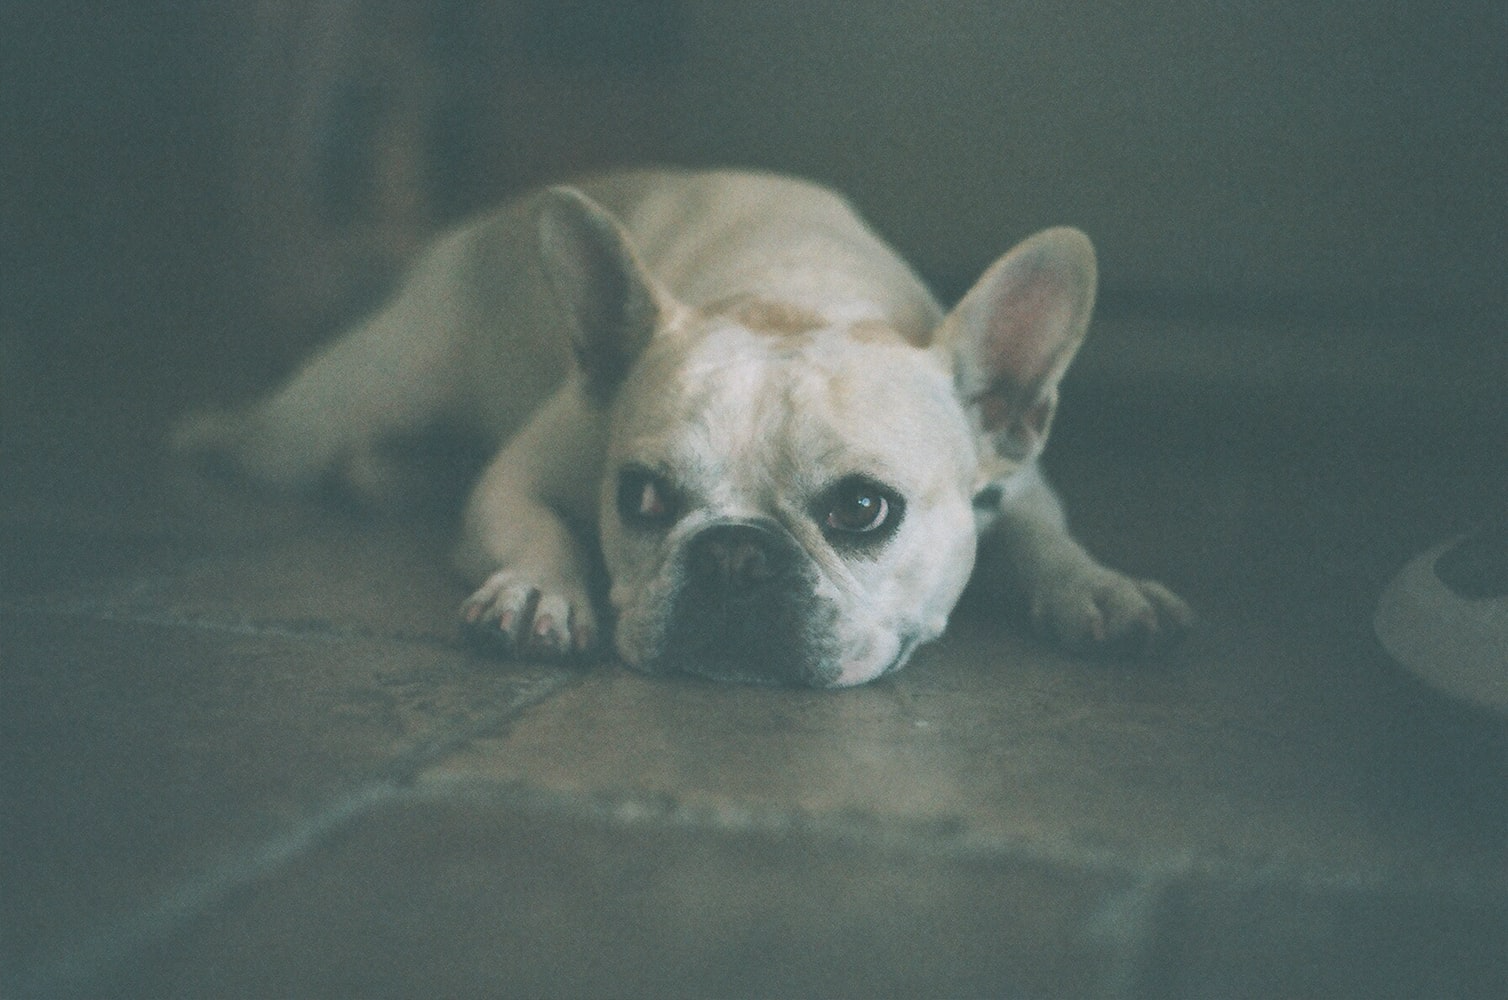 A French Bulldog lying on the floor